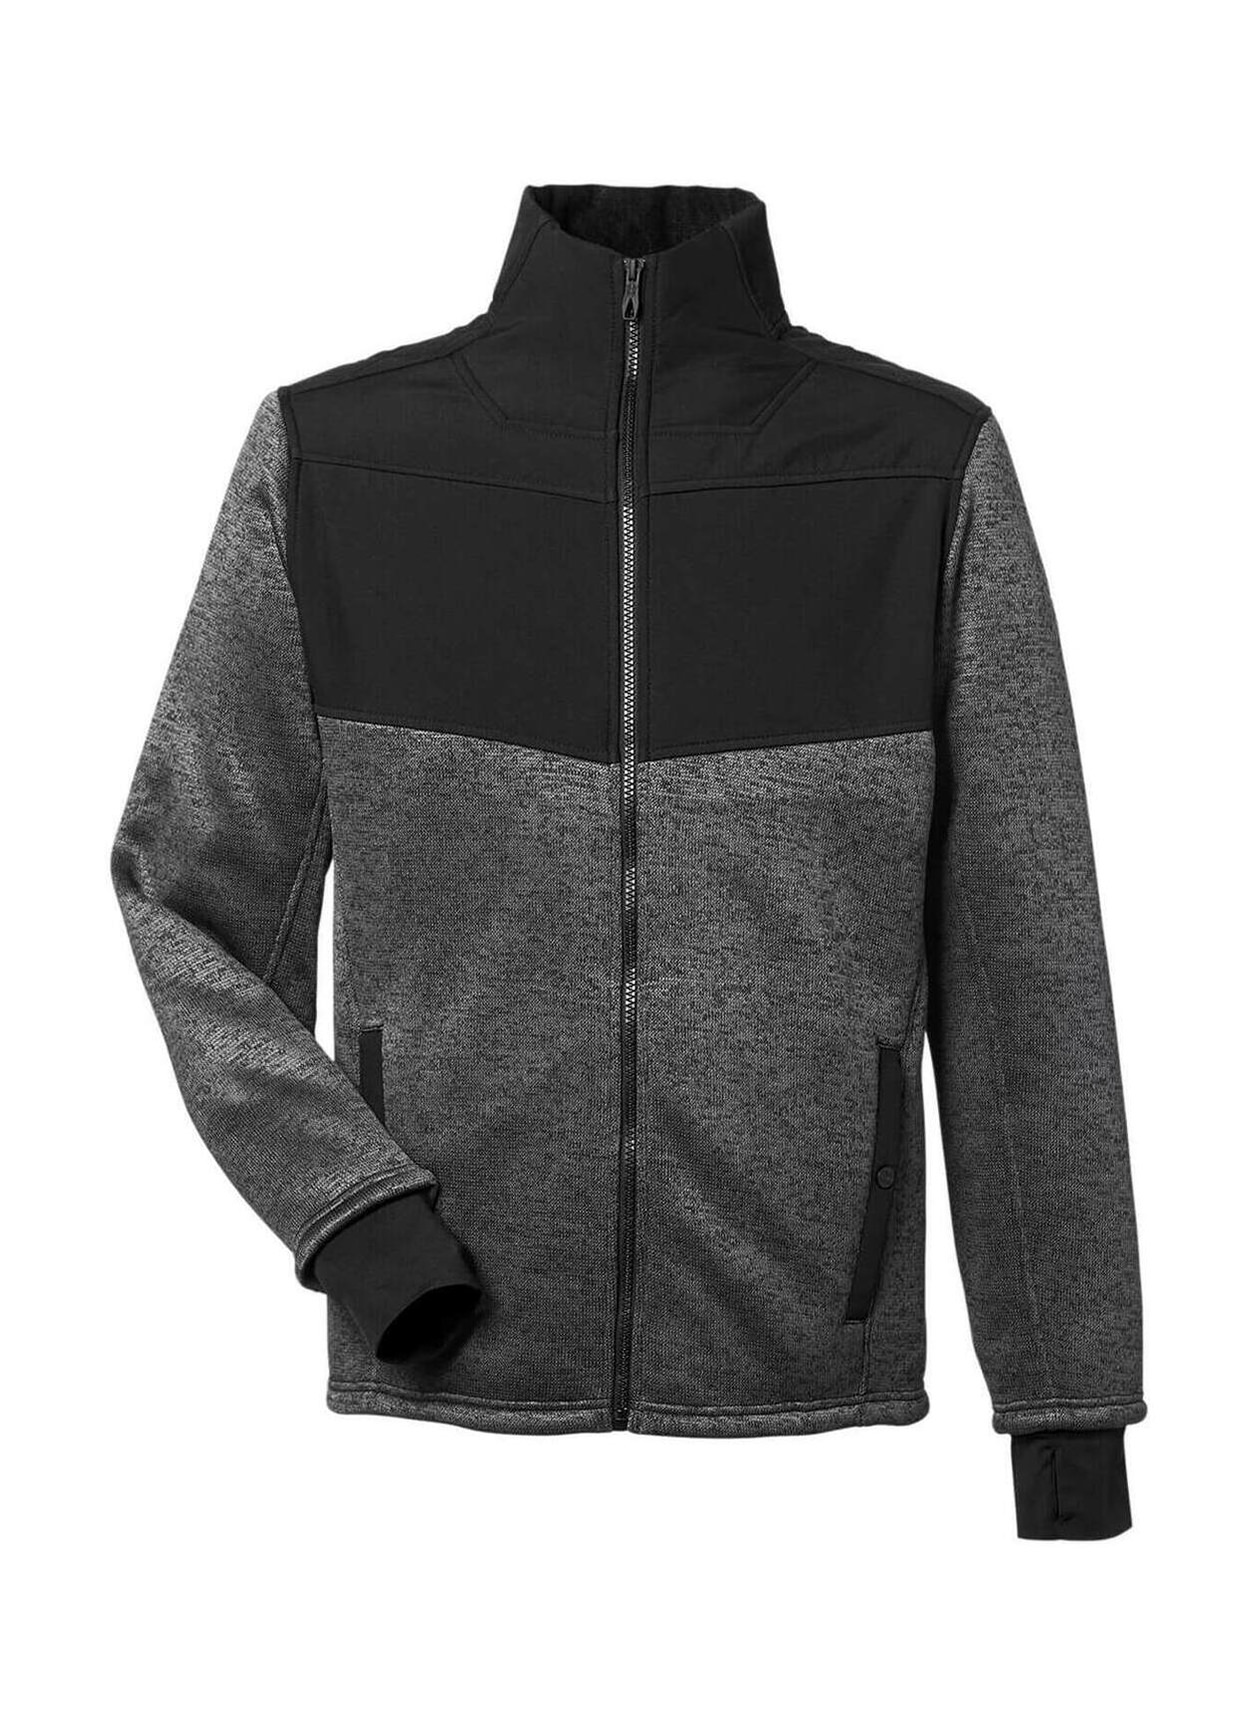 Corporate Spyder Men's Polar Powder-Black Passage Sweater Jacket